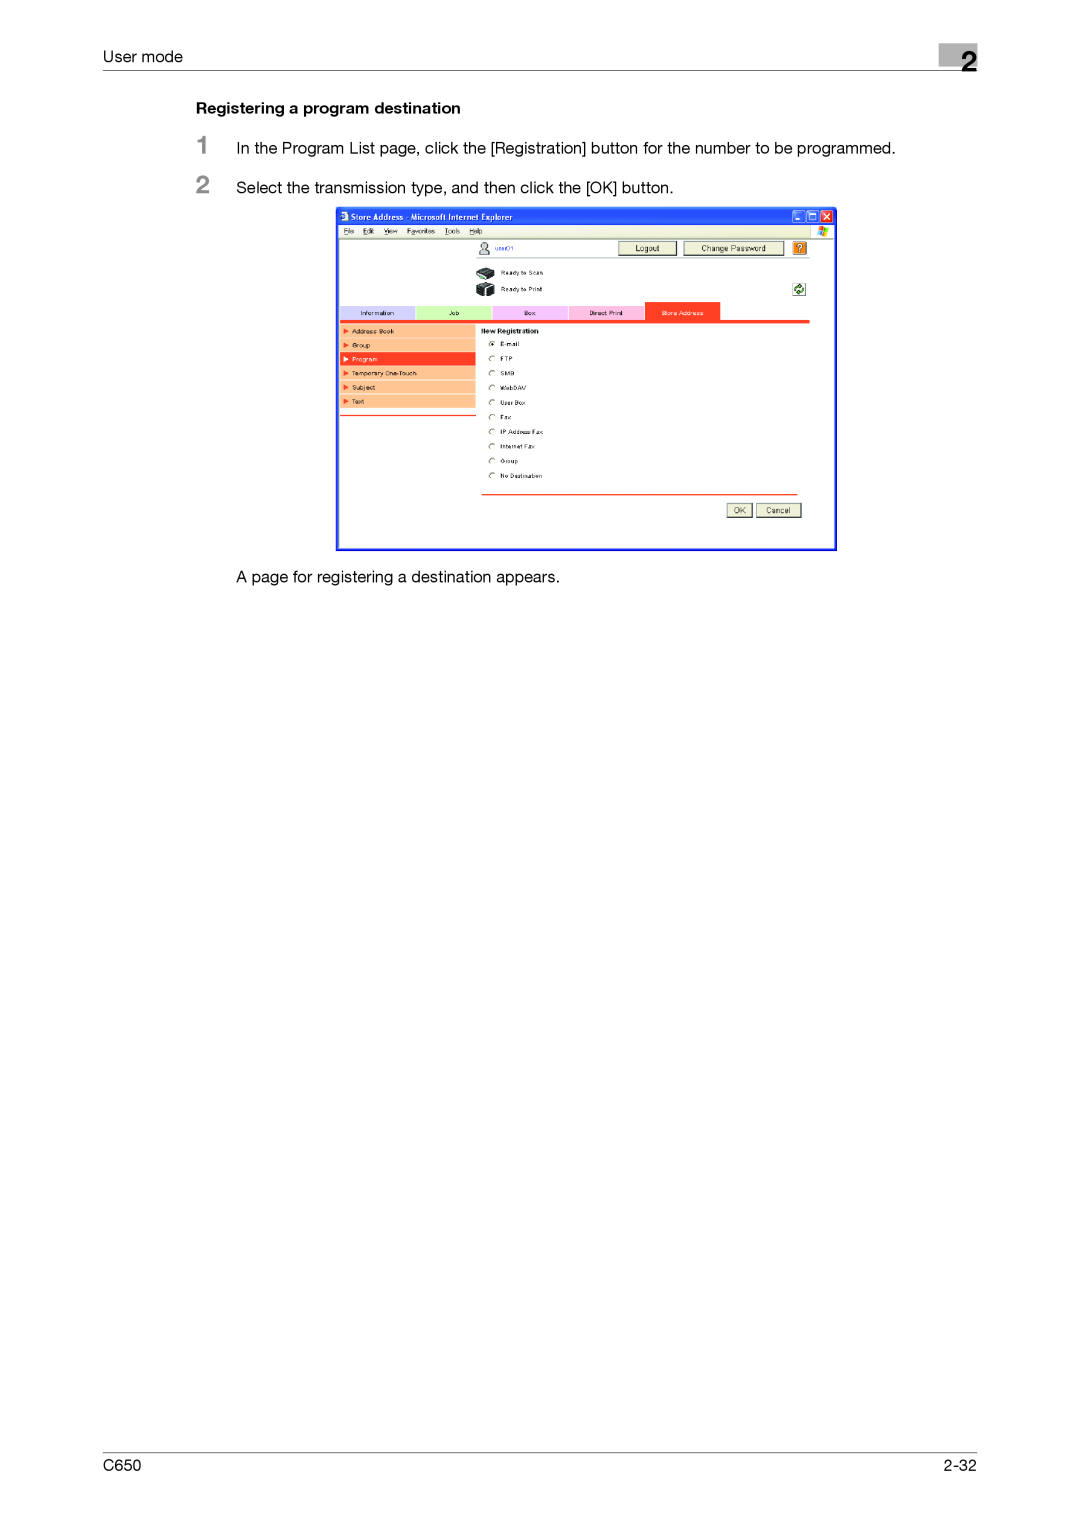 Konica Minolta C650 manual User mode, Registering a program destination, A page for registering a destination appears, 2-32 